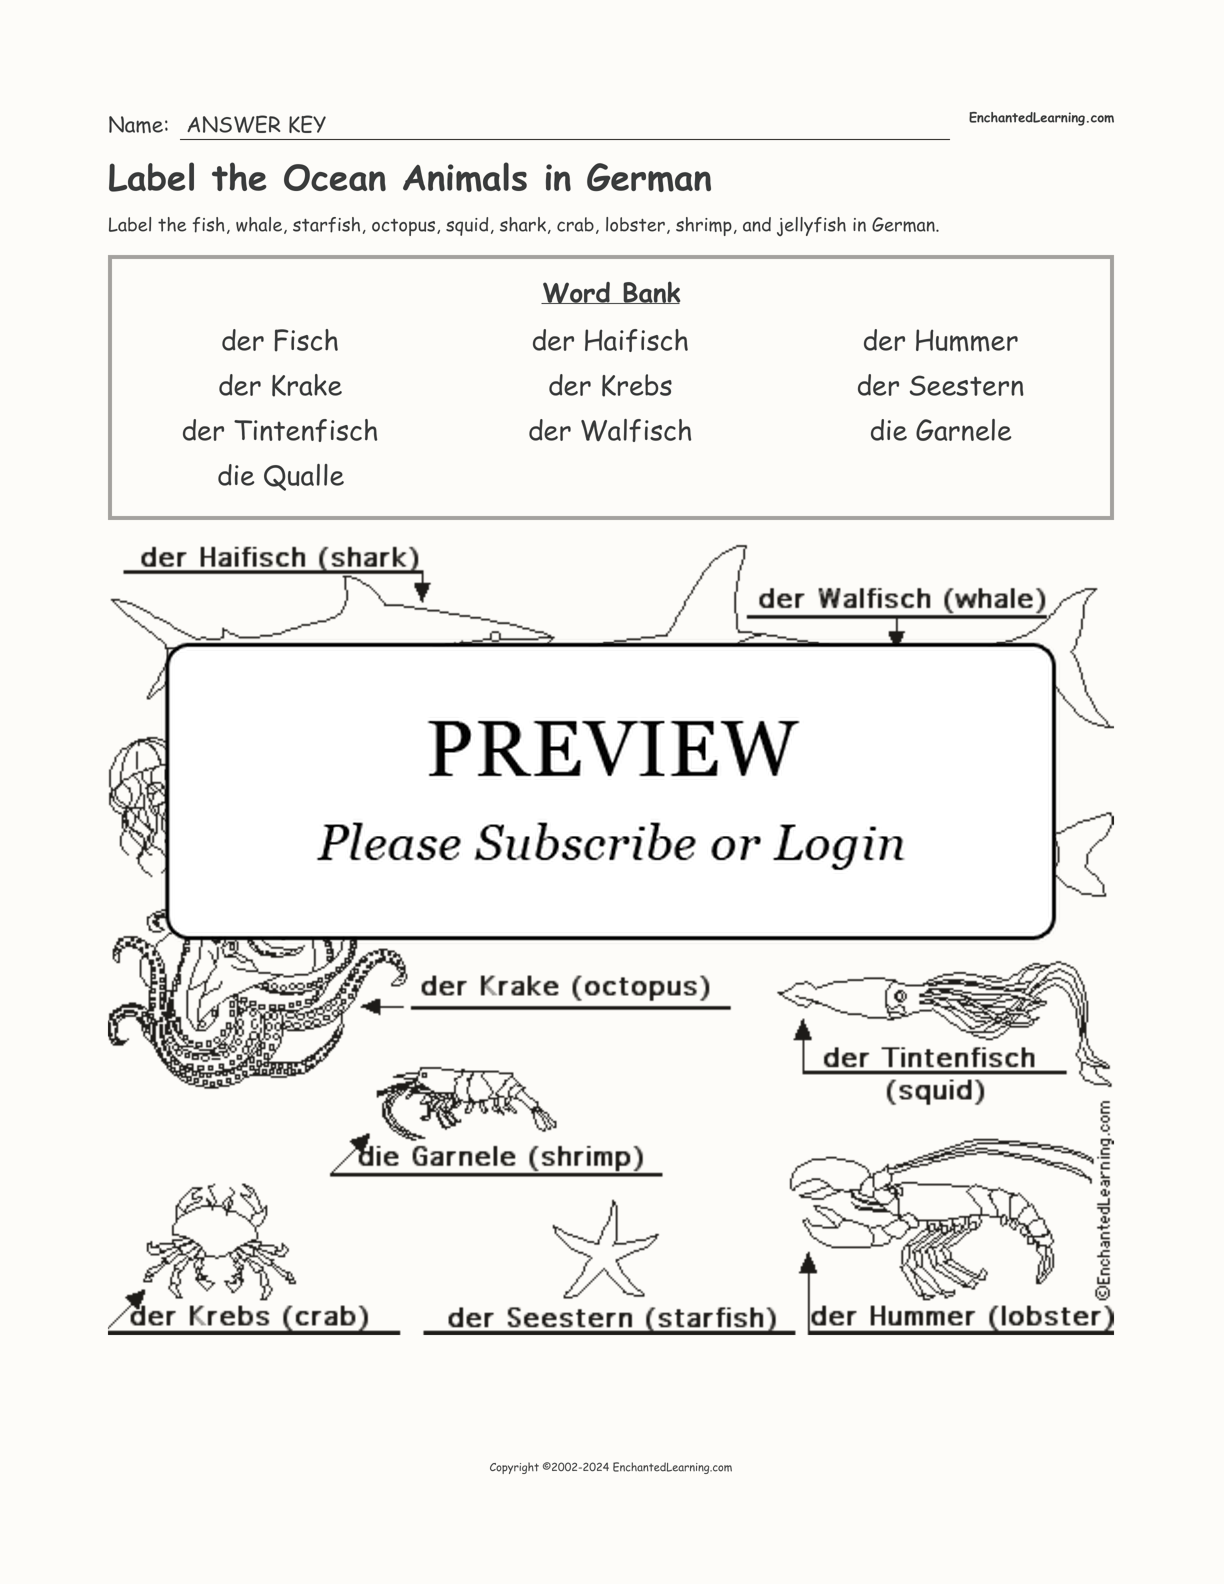 Label the Ocean Animals in German interactive worksheet page 2